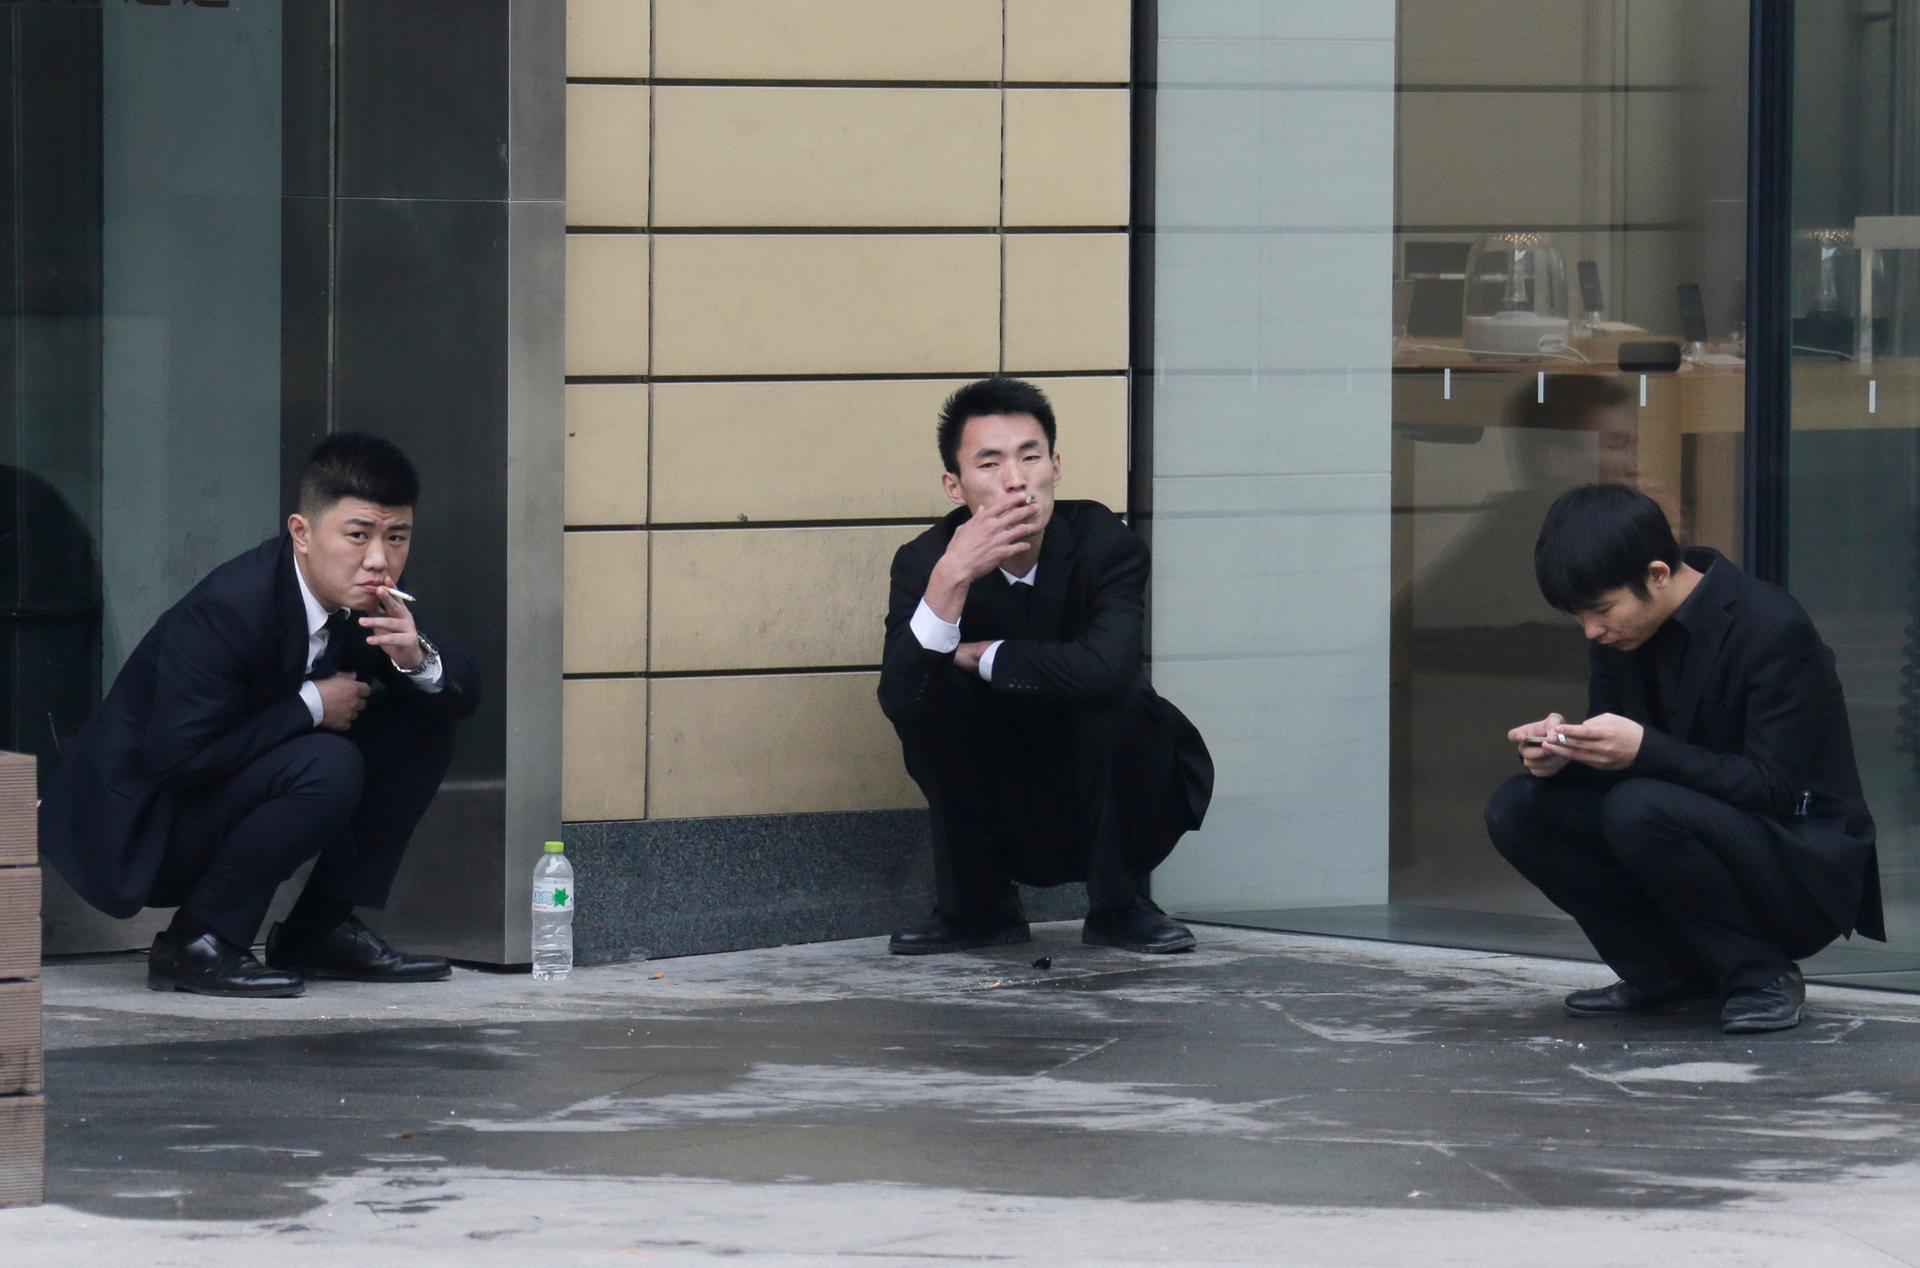 Chinese office workers take a smoke break